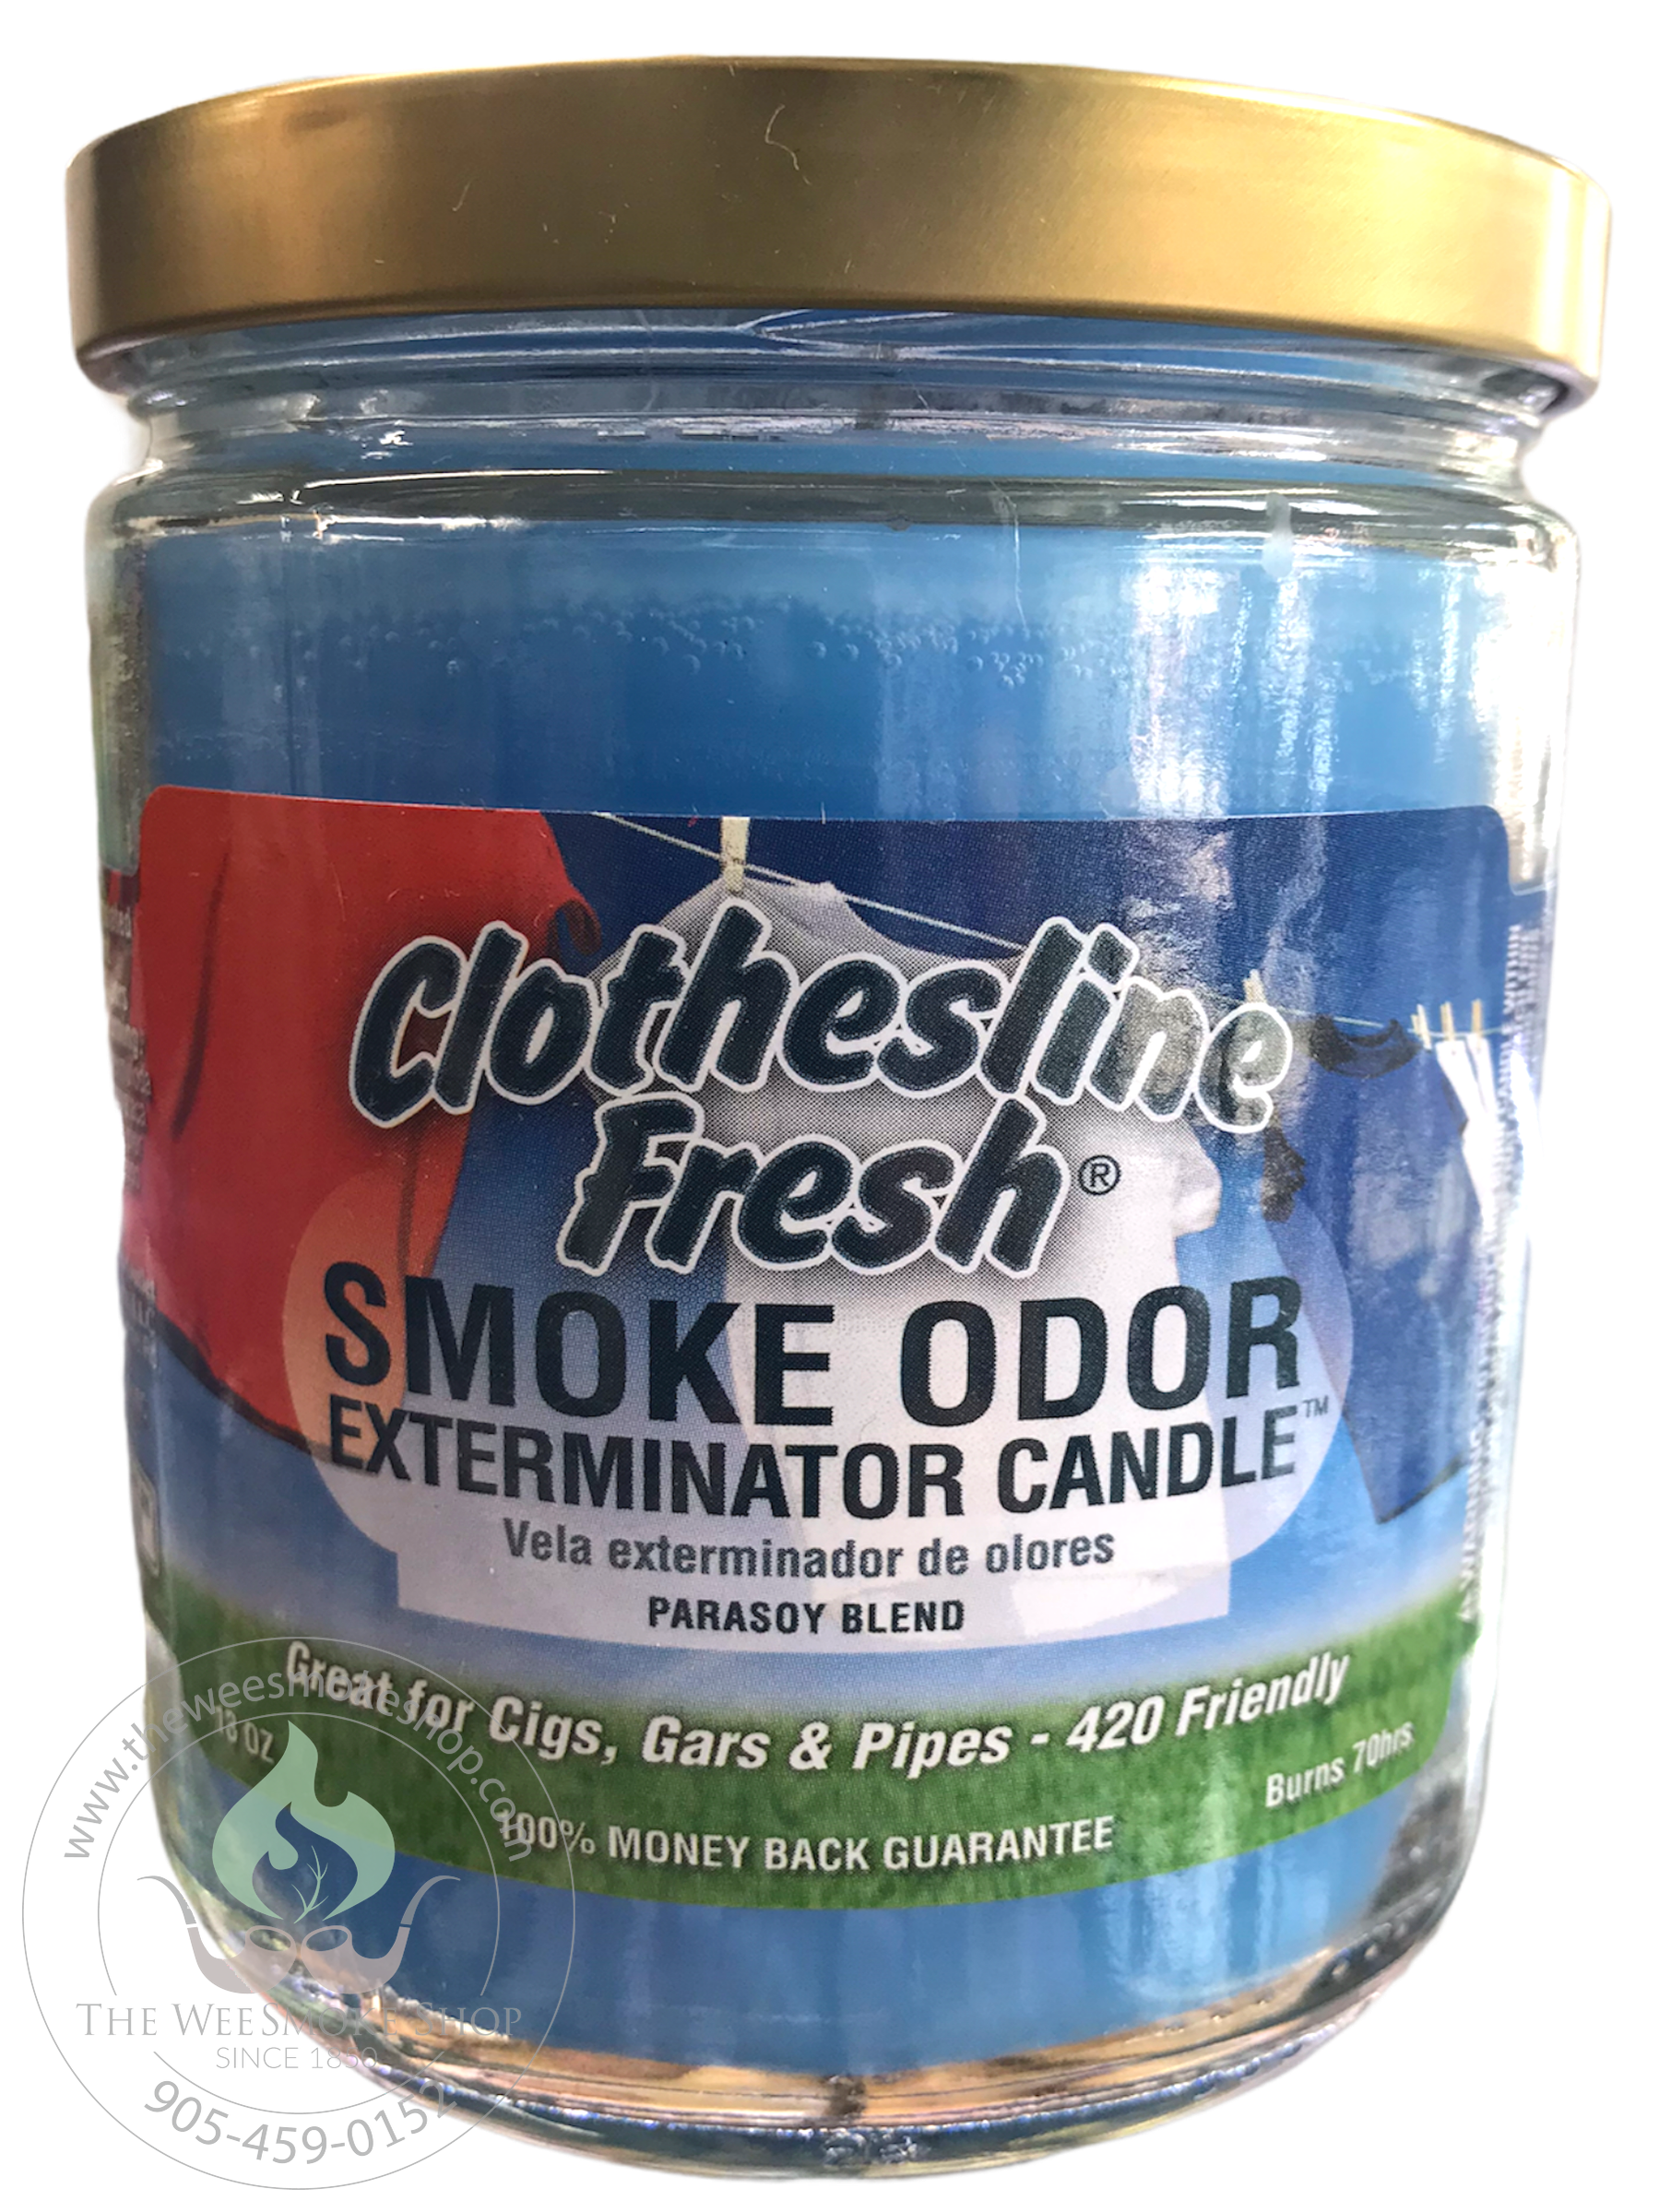 Clothsline Fresh Smoke Odor Exterminator Candle - Wee Smoke Shop